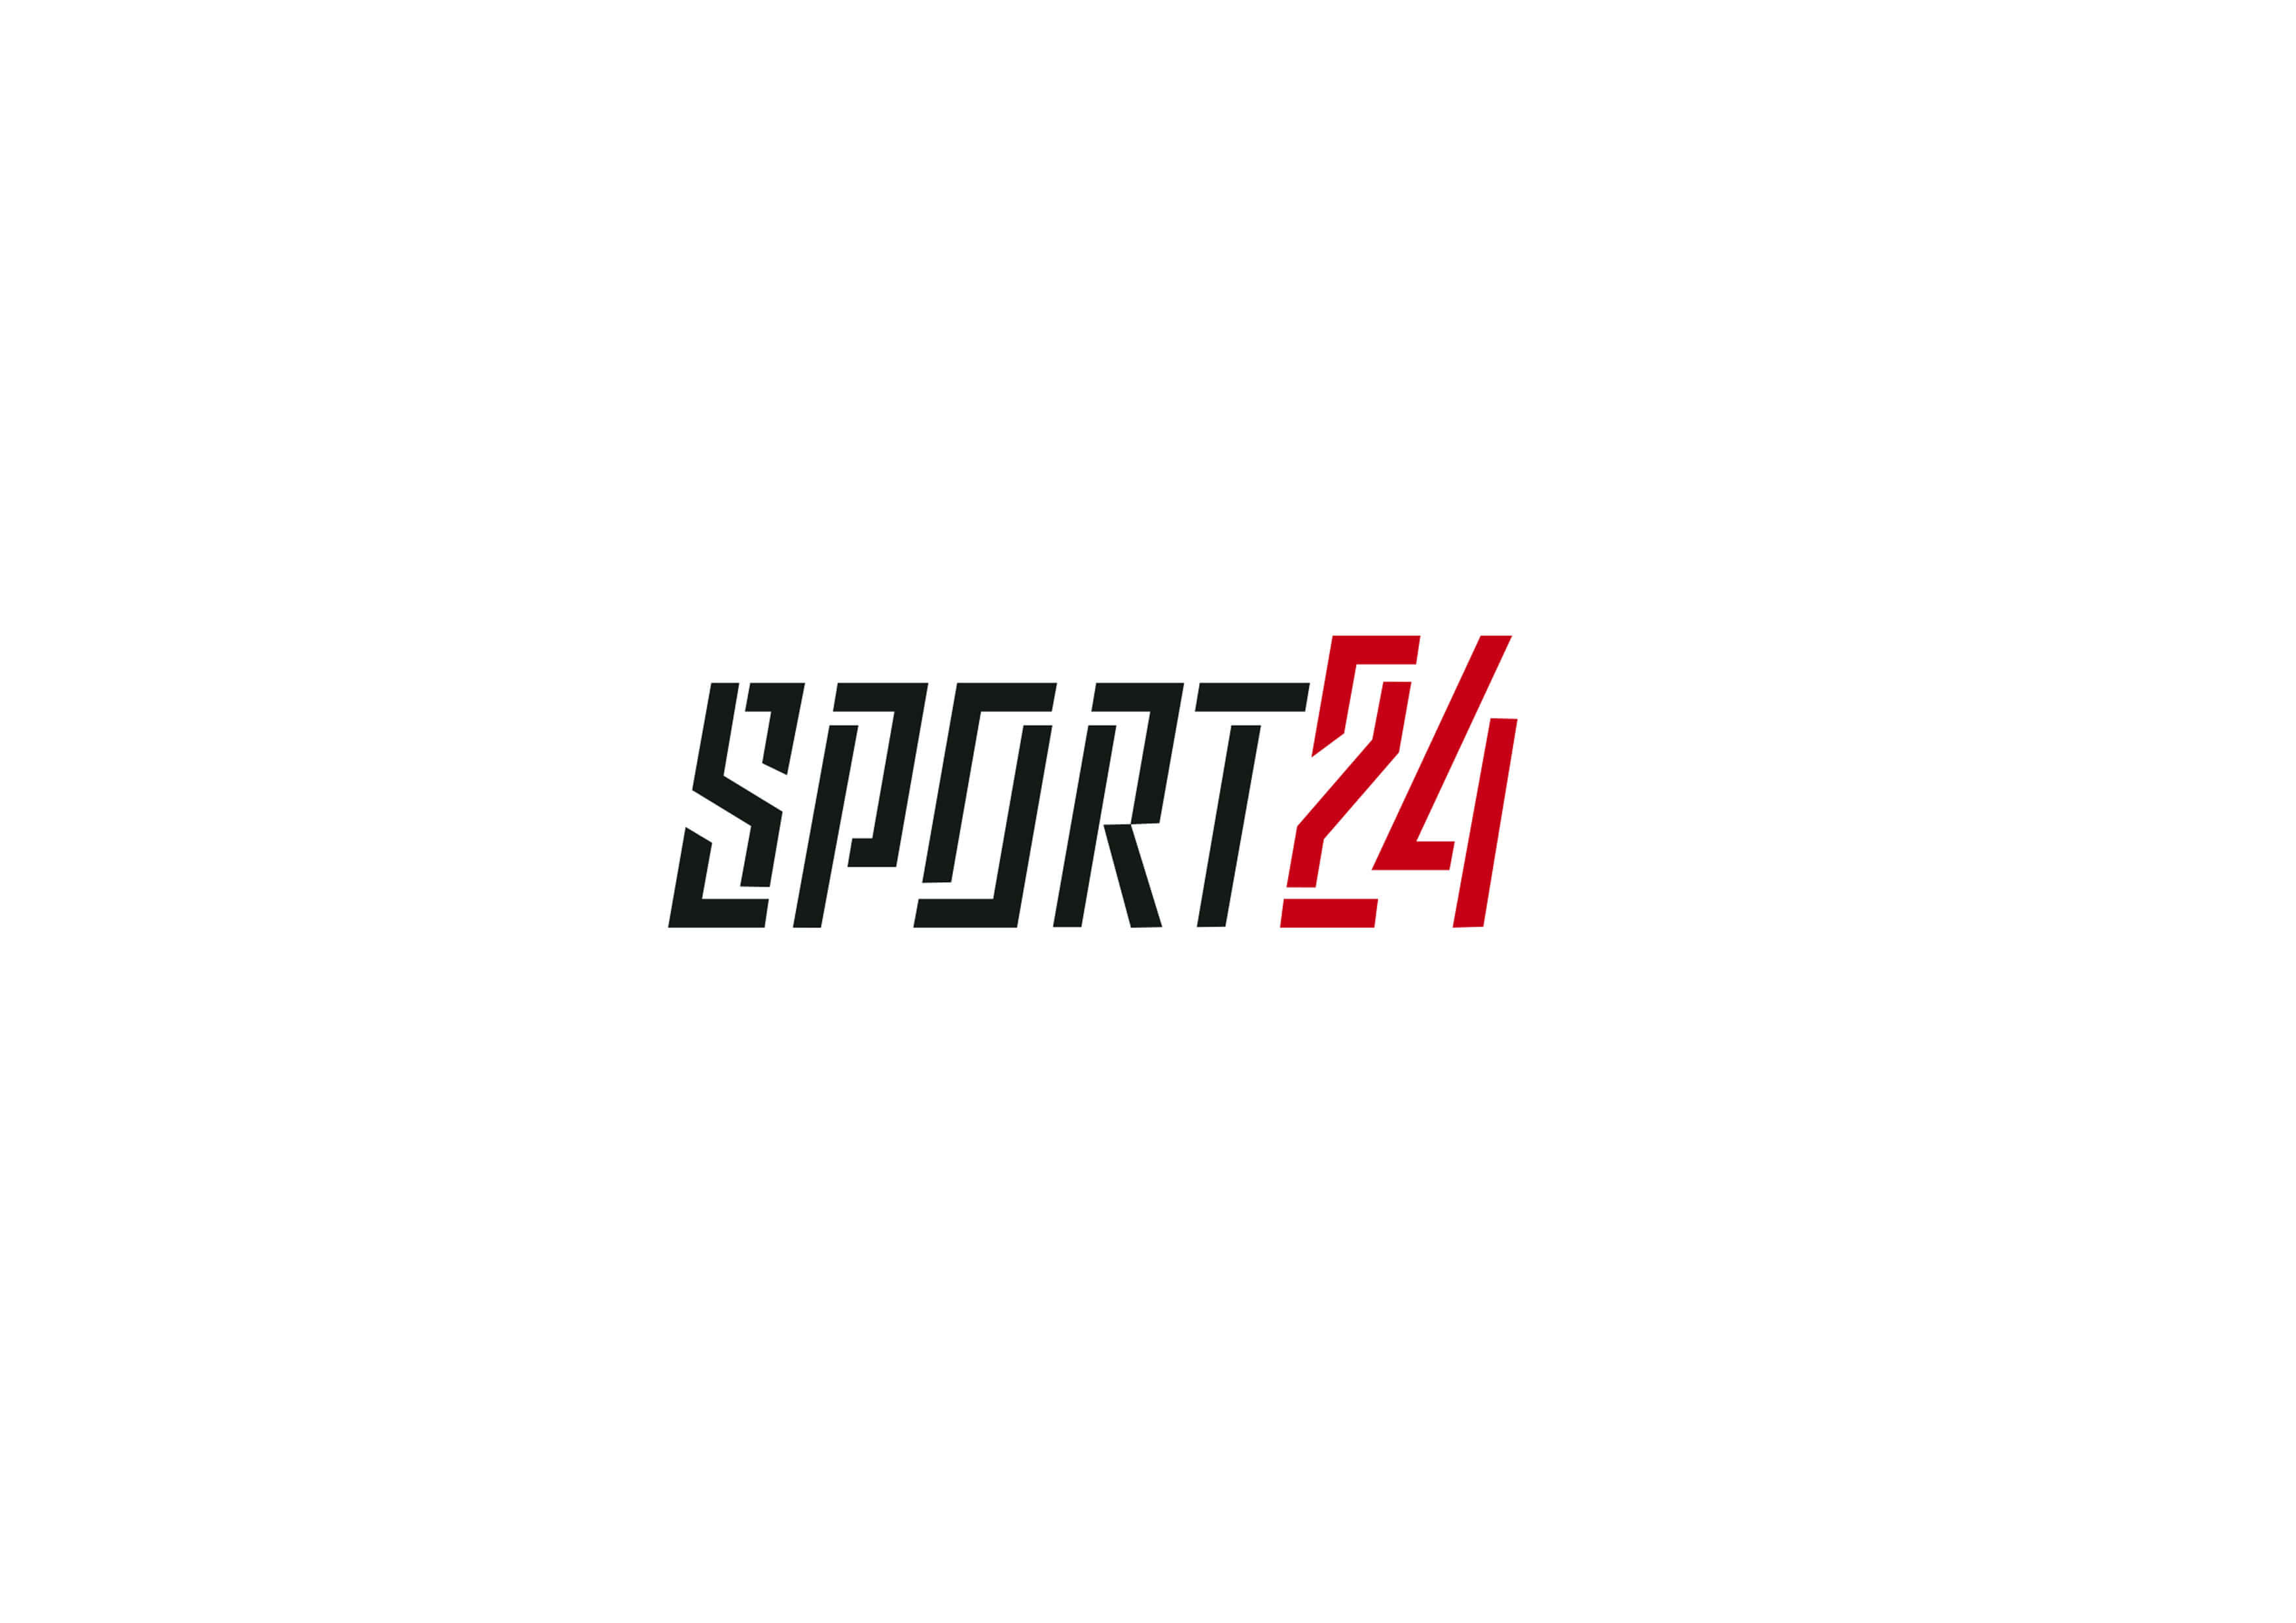 sport24 identity process 21